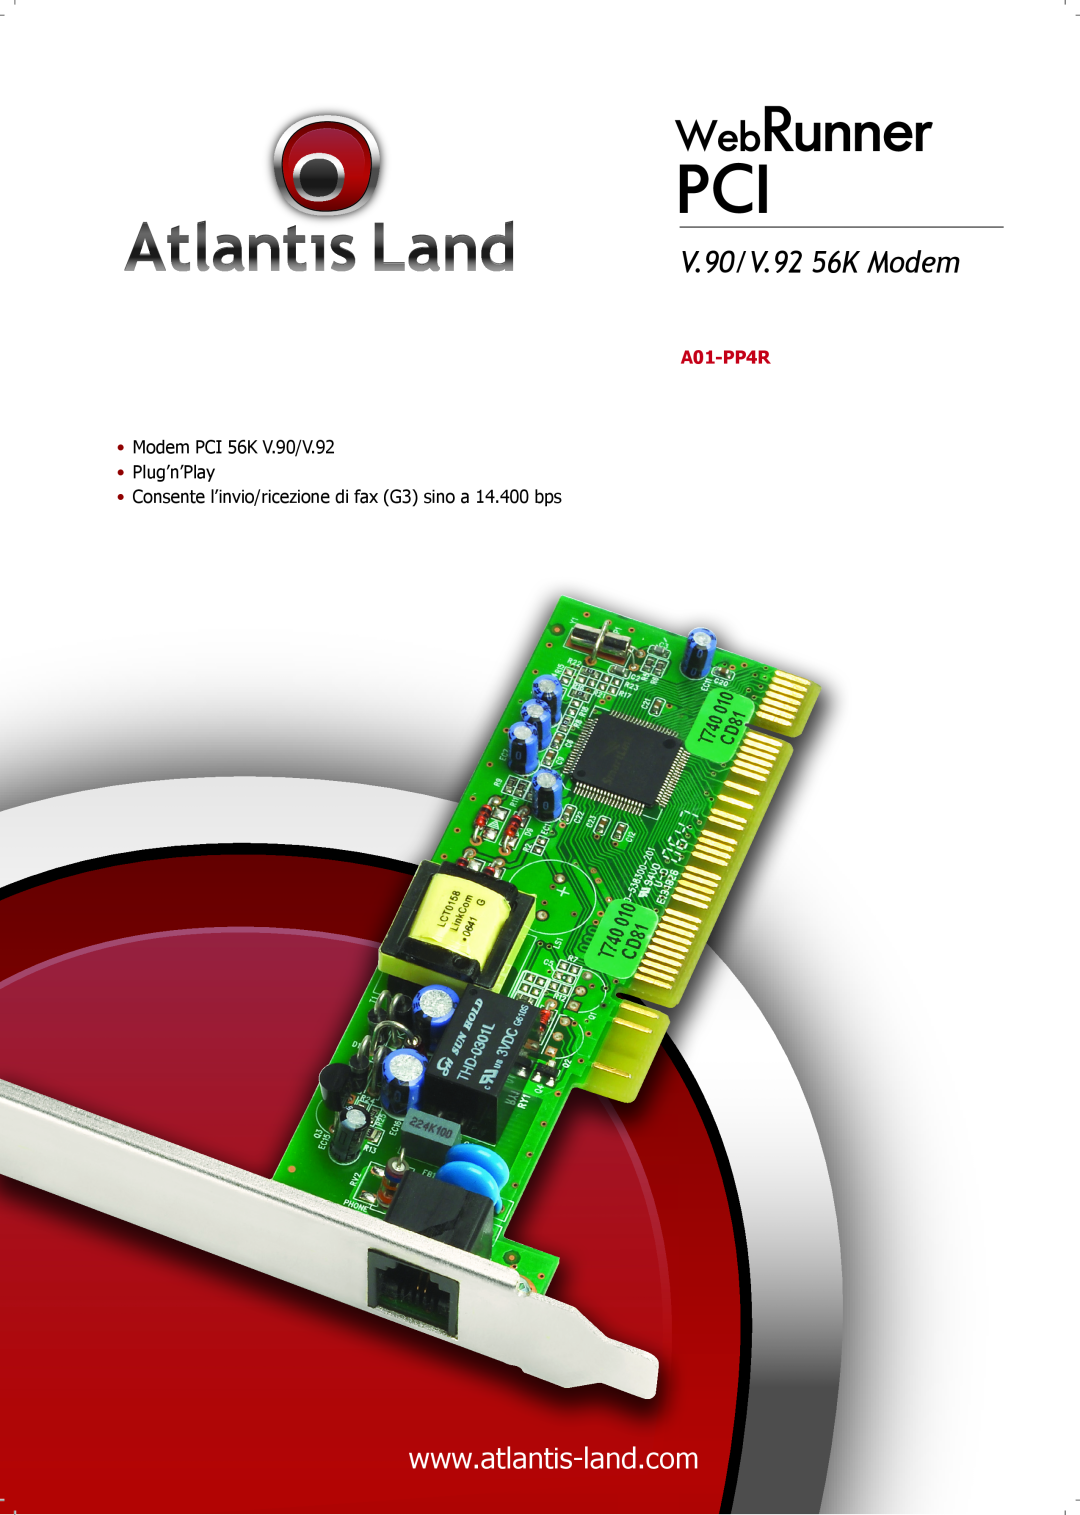 Atlantis Land A01-PP4R manual WebRunner, V.90/V.92 56K Modem, Modem PCI 56K V.90/V.92 Plug’n’Play 